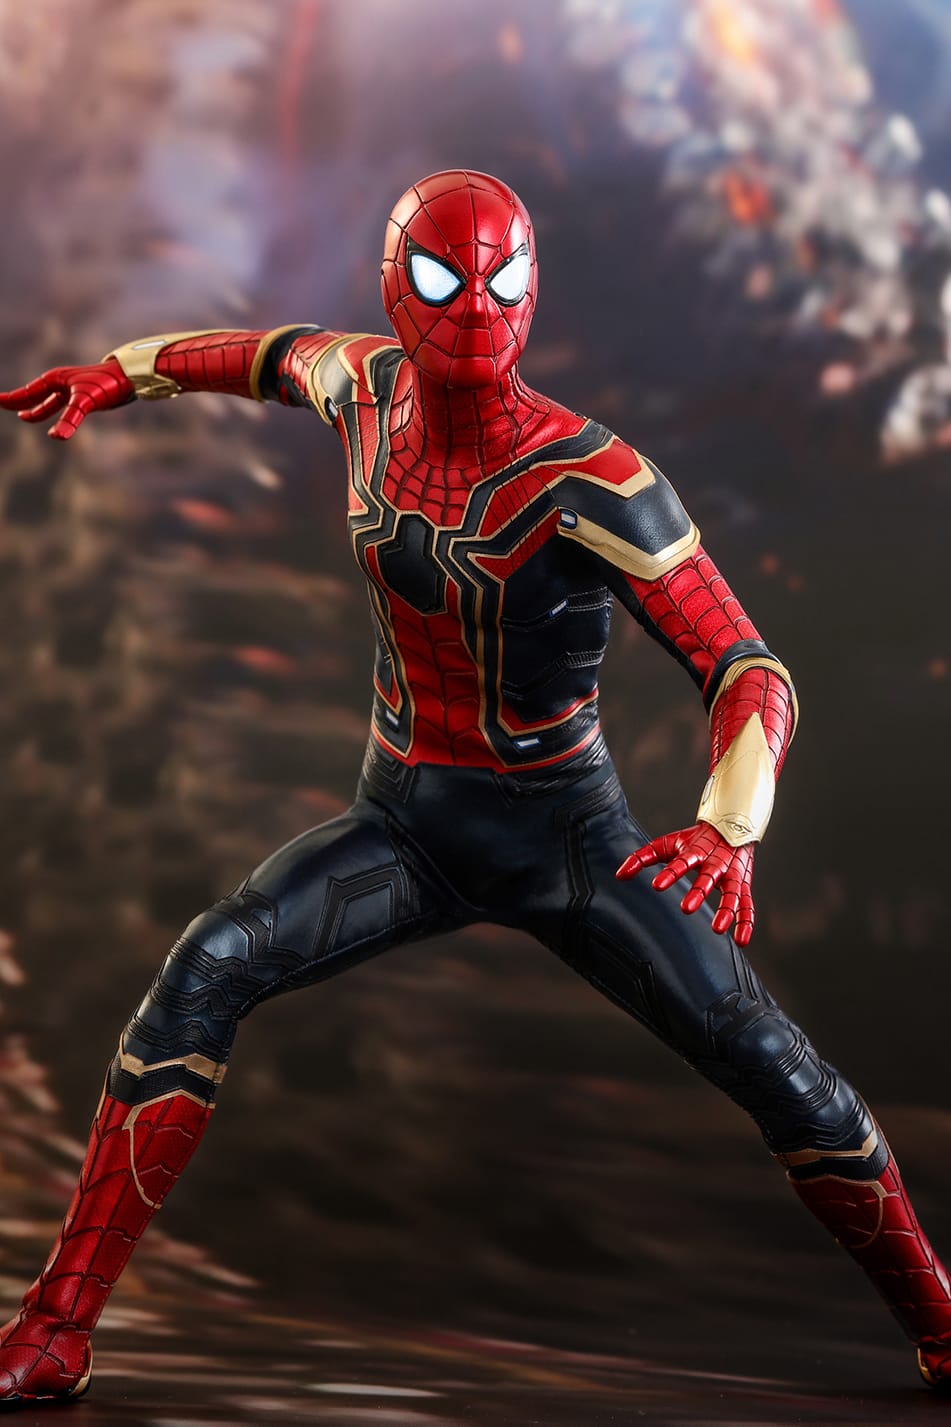 spider man avengers infinity war toy